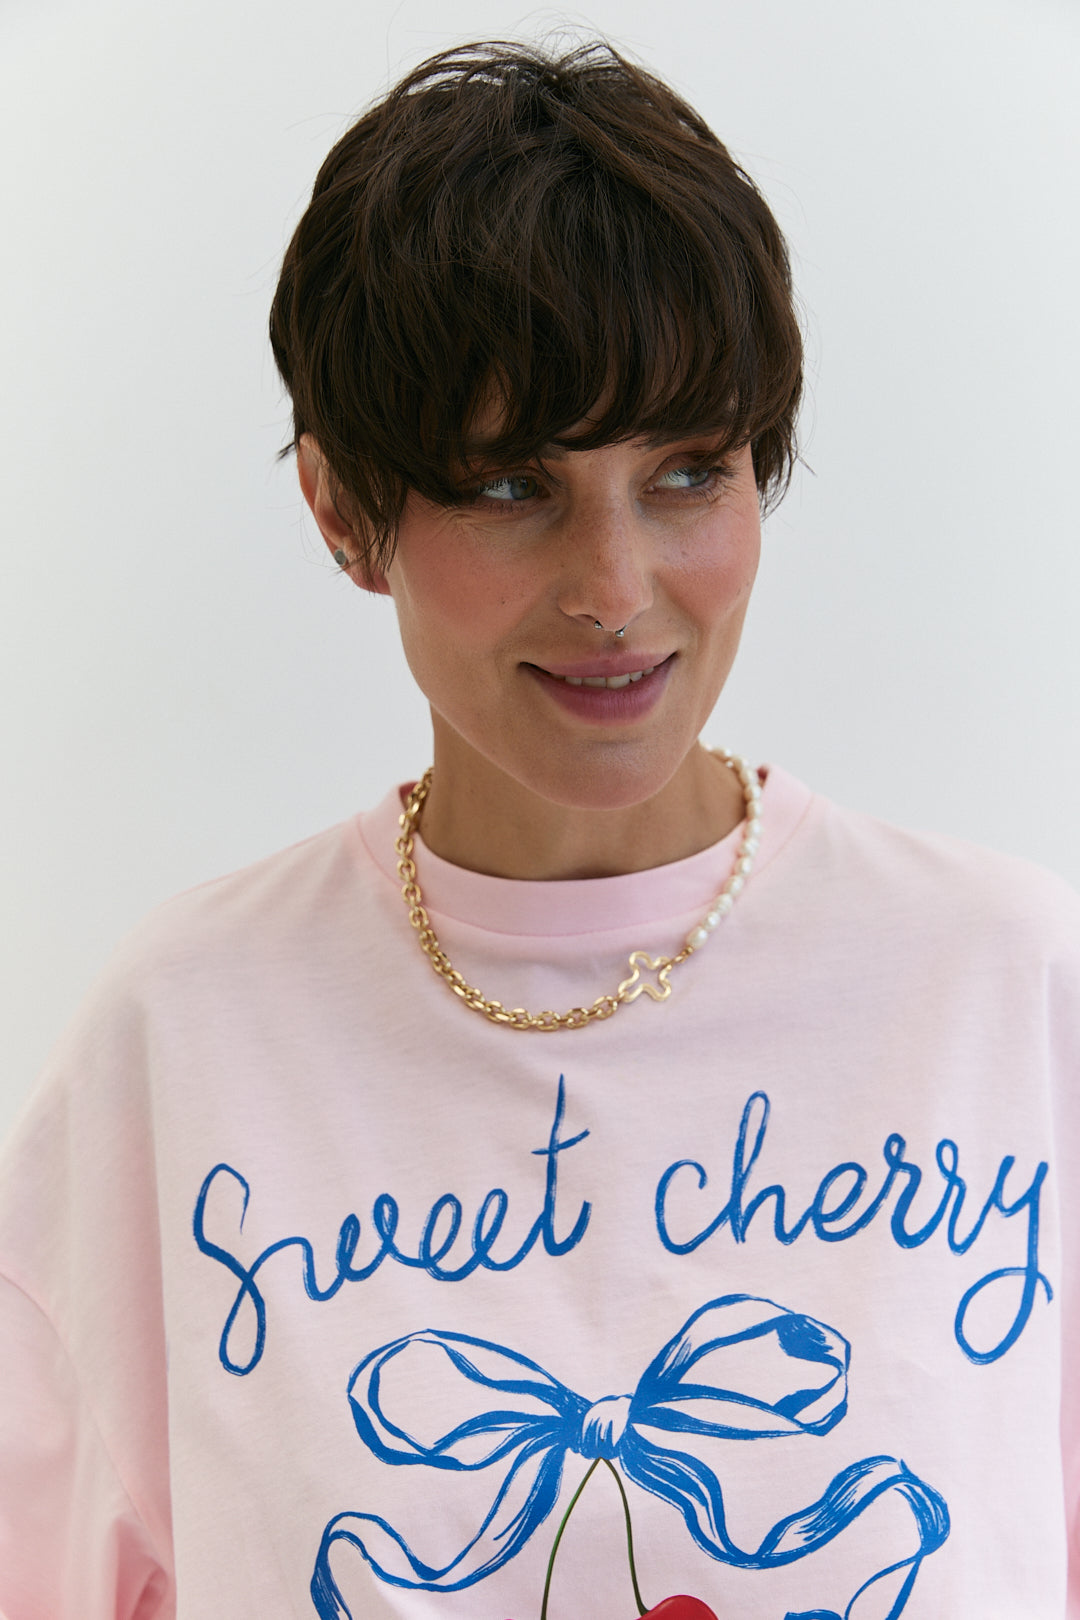 Pink T-shirt "Sweet Cherry"